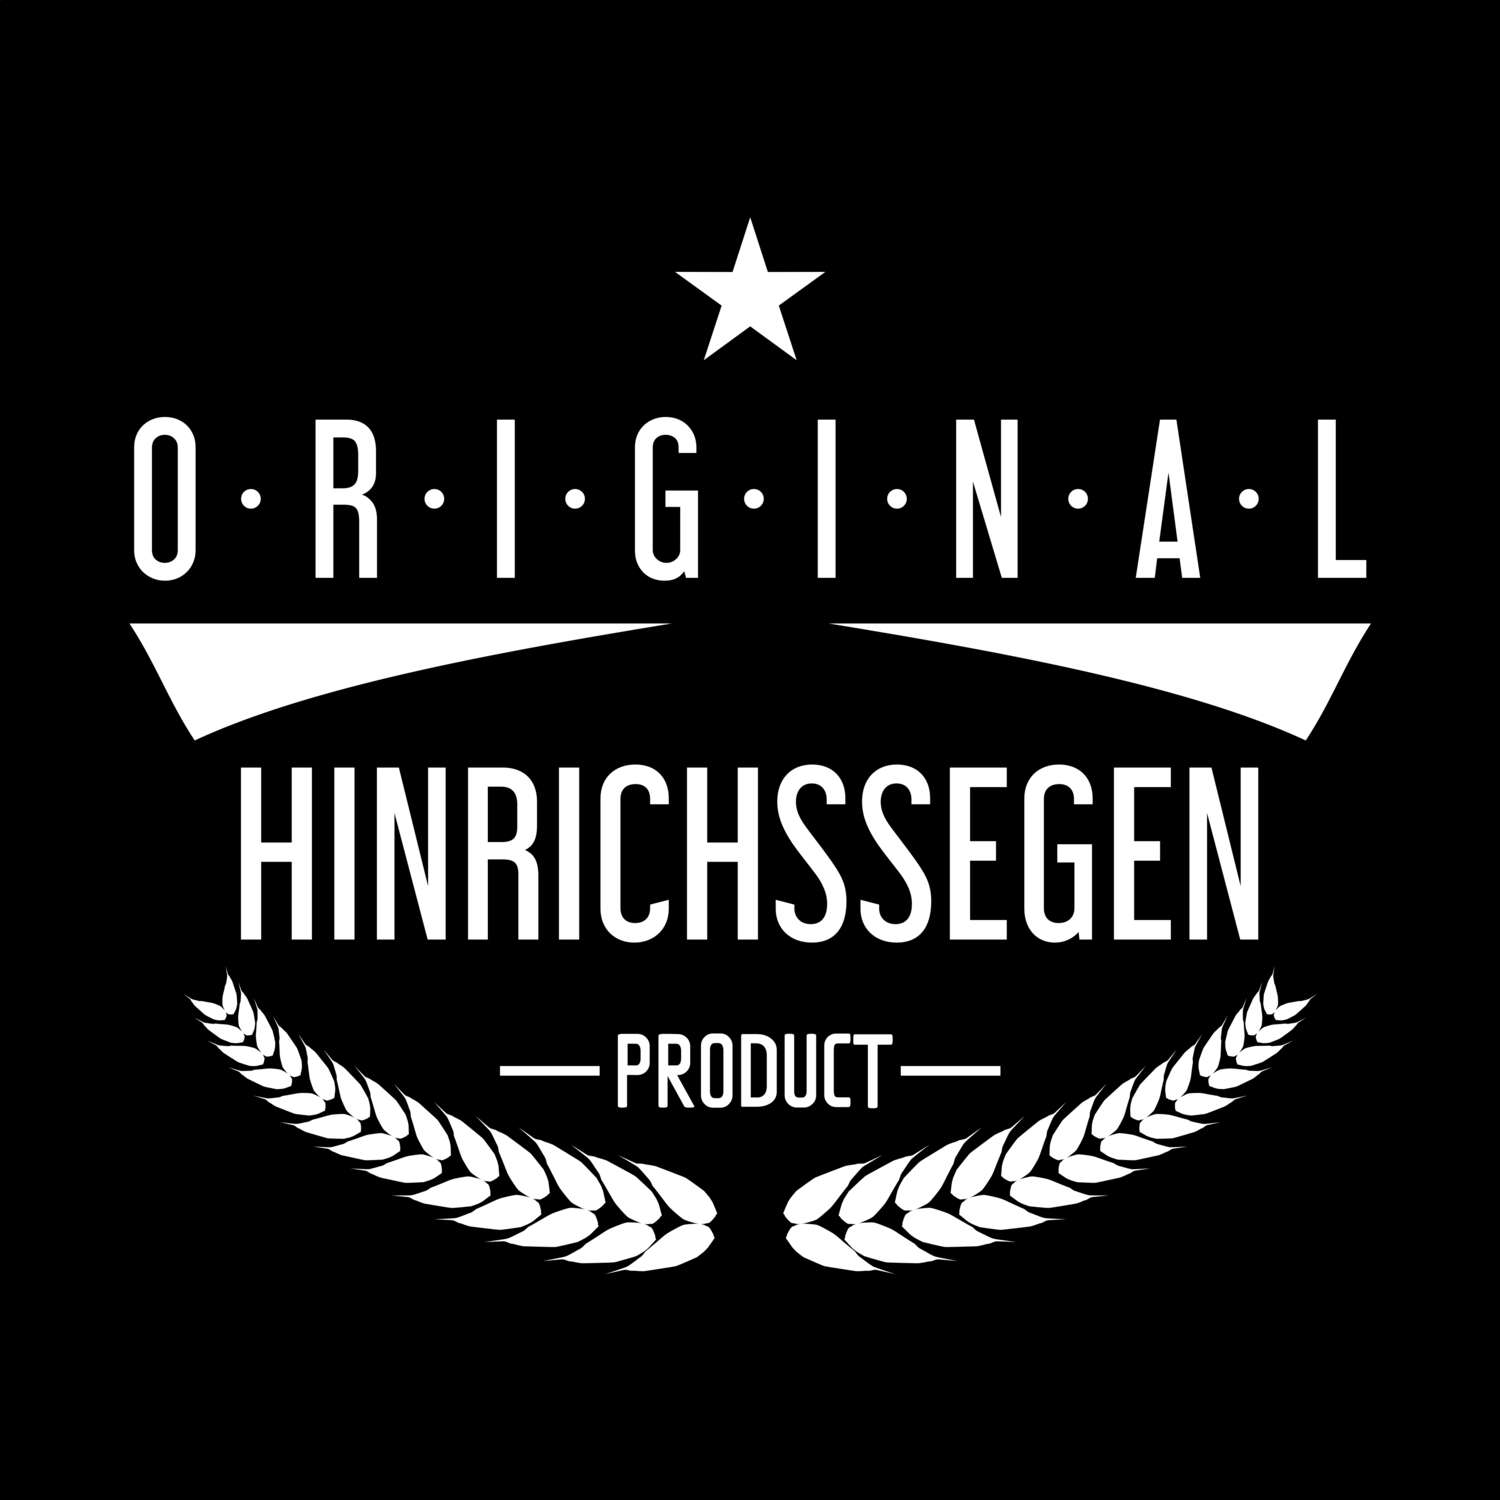 Hinrichssegen T-Shirt »Original Product«